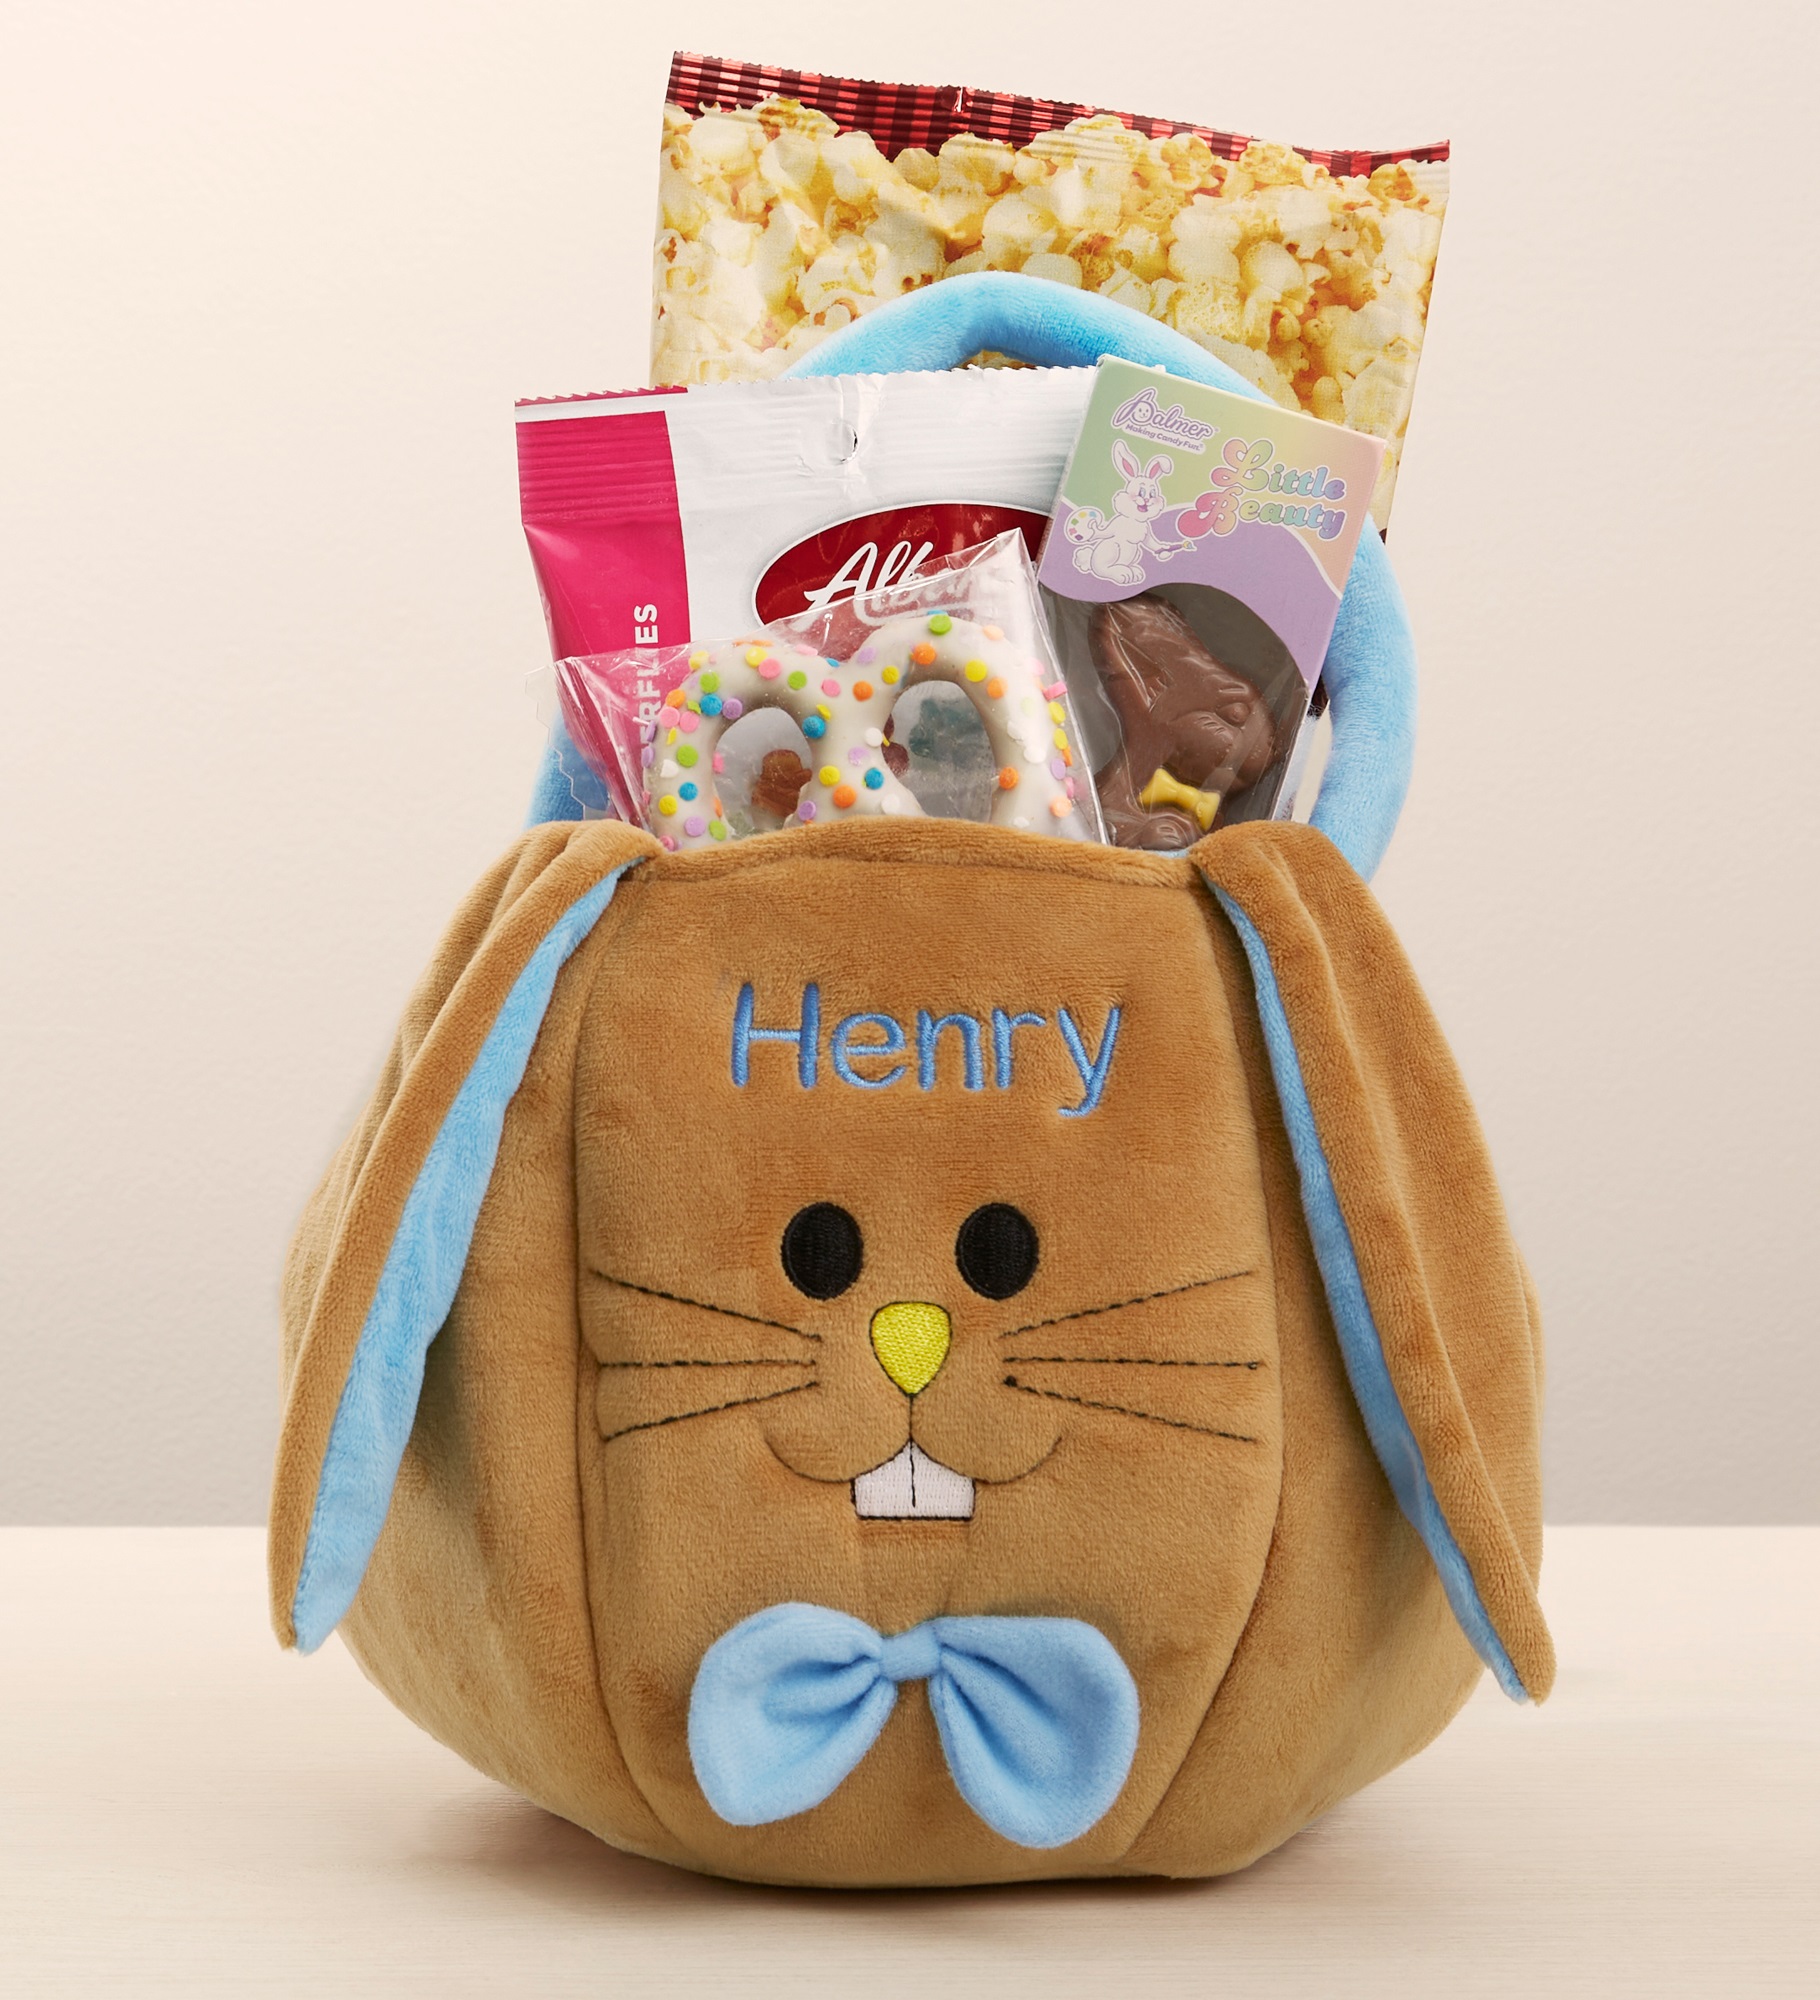 Embroidered Easter Bunny Basket & Treat Gift Set